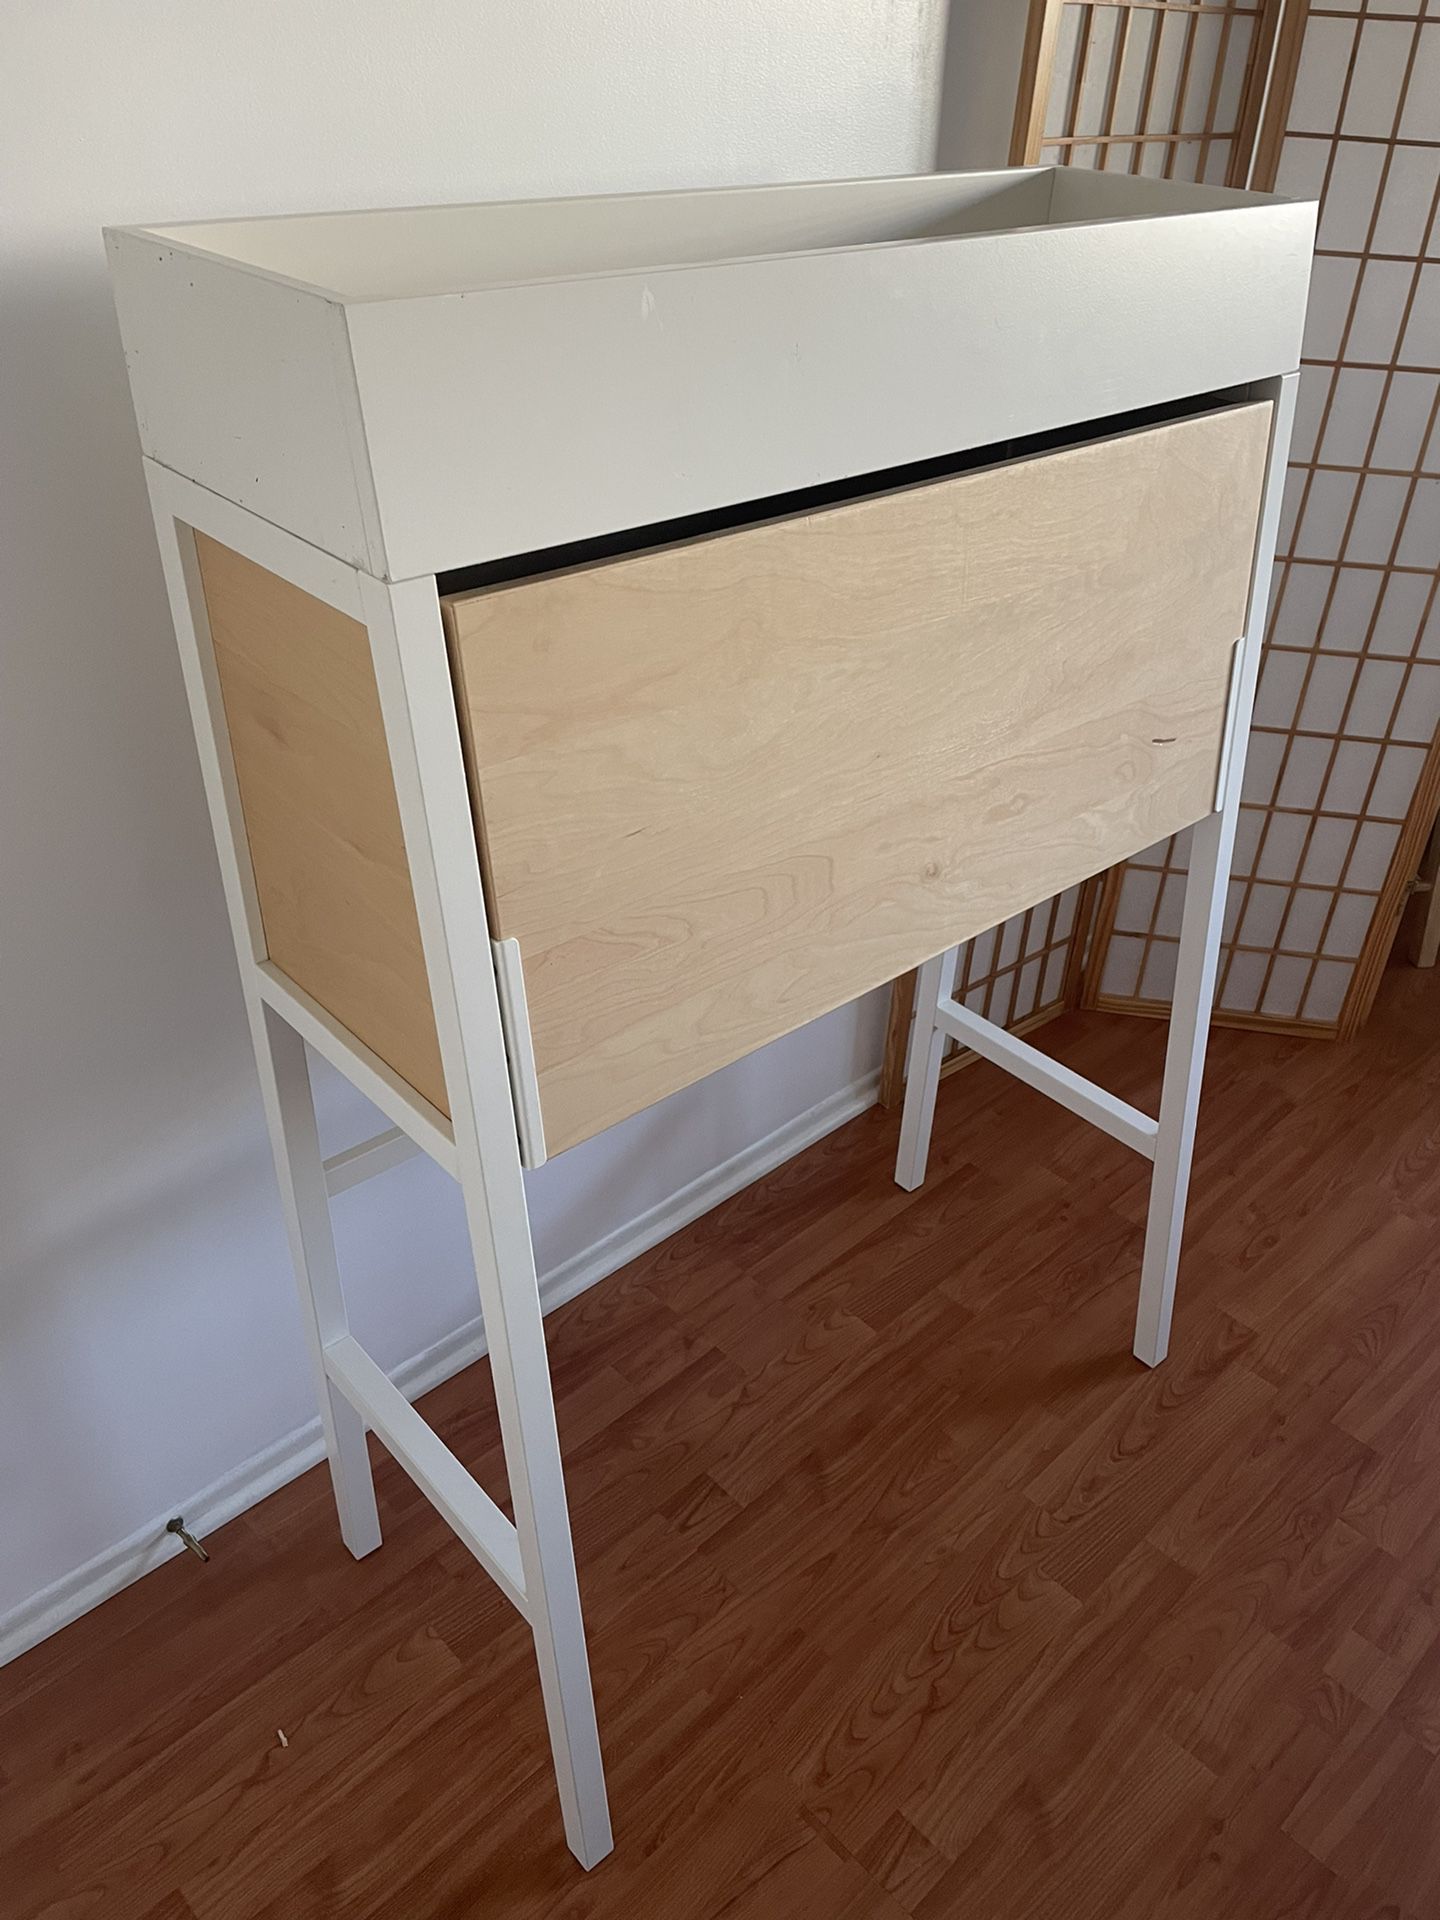 IKEA Folding Desk - PS 2014 Secretary Desk